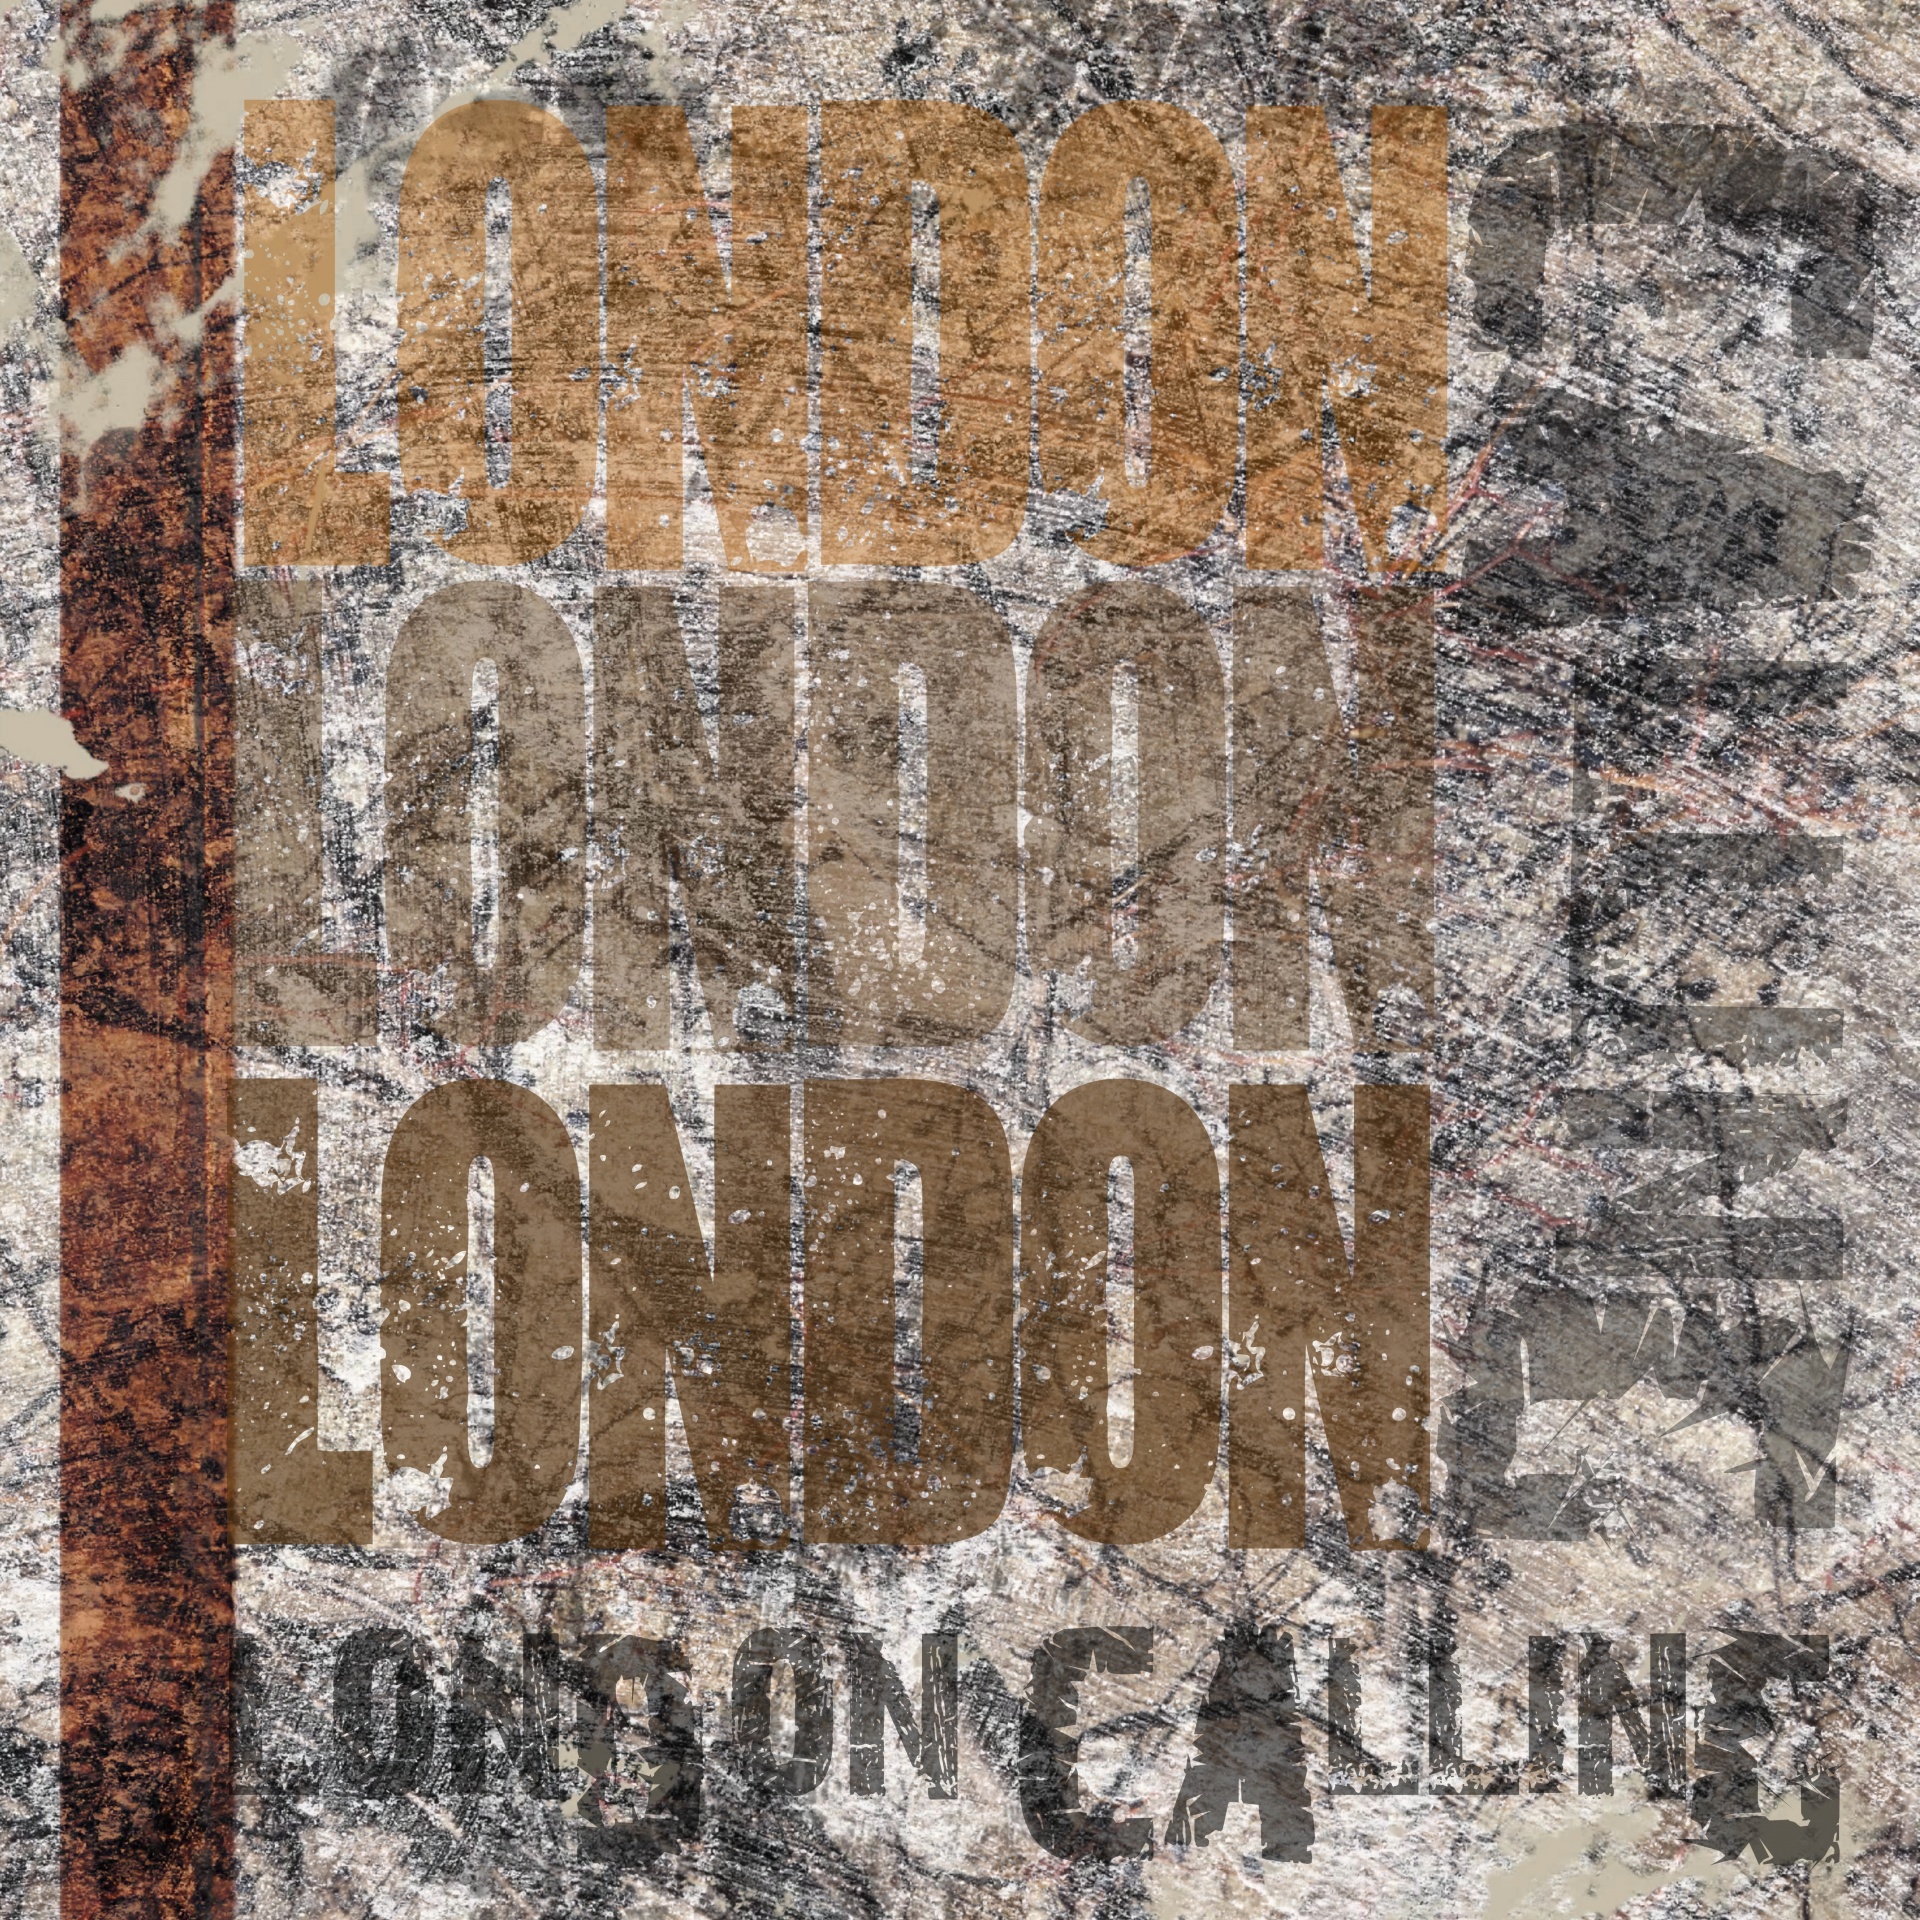 London Calling Grunge arte da colagem